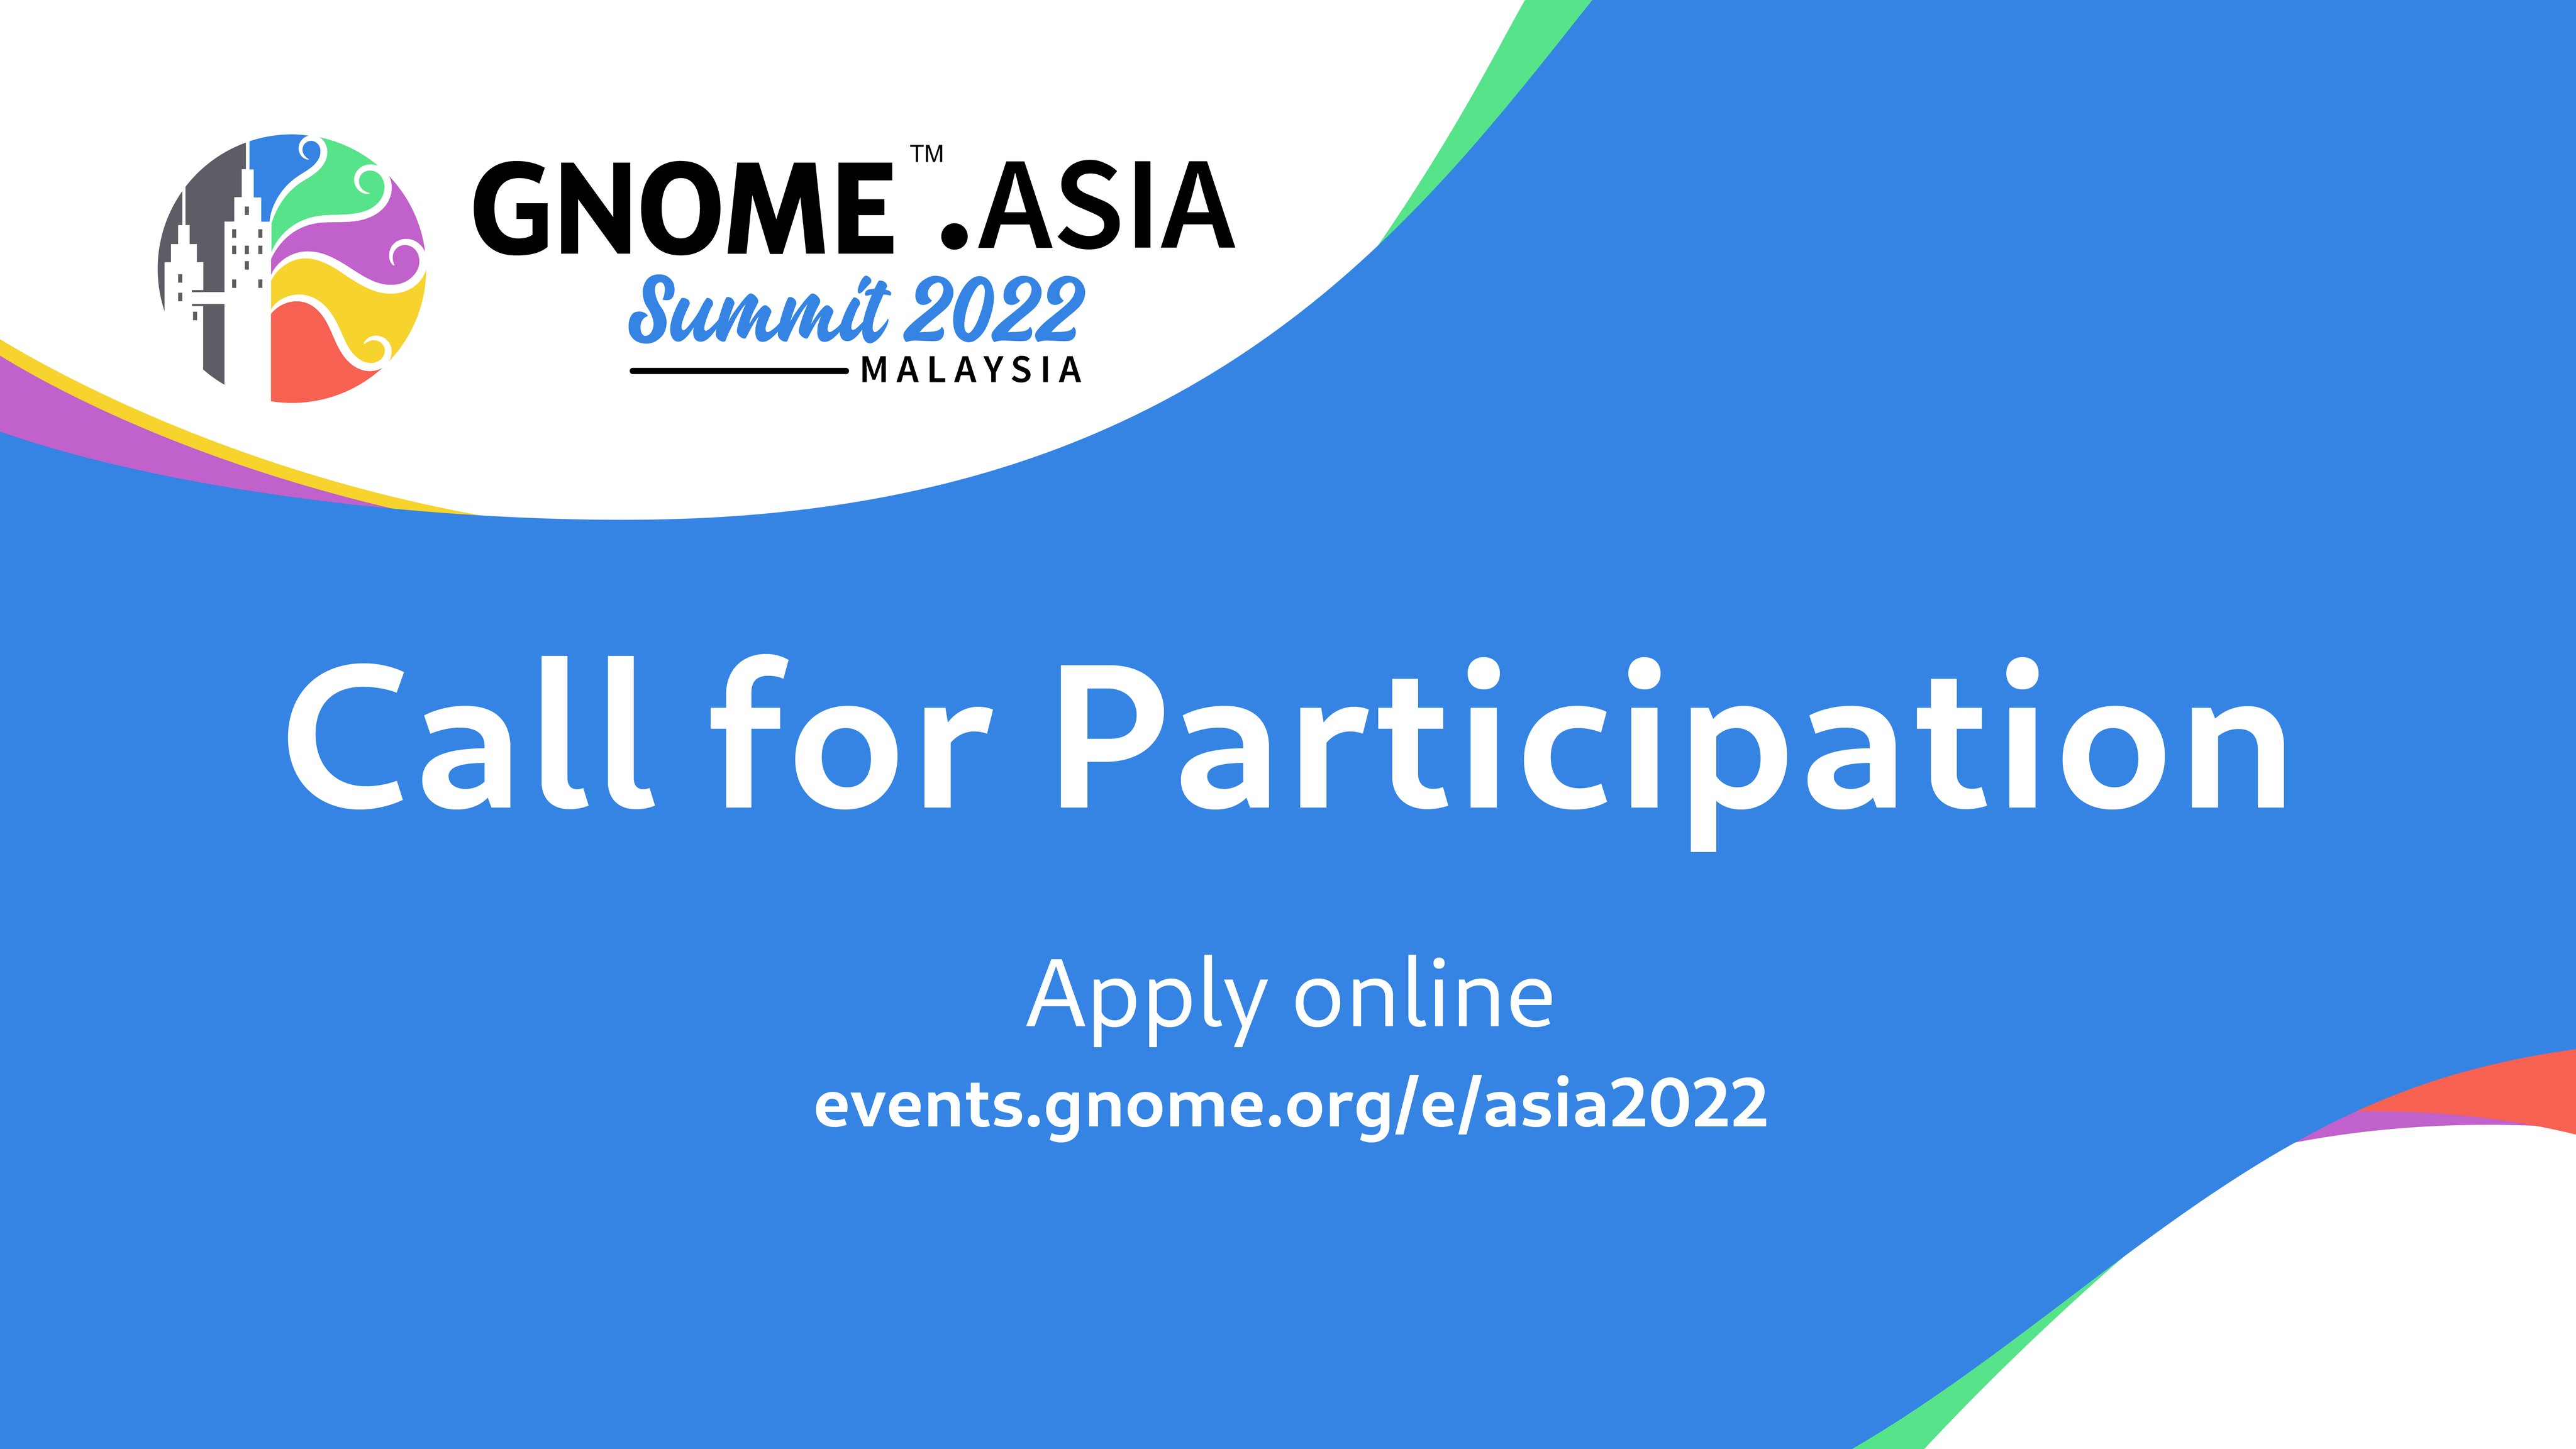 GNOME.Asia Summit 2022